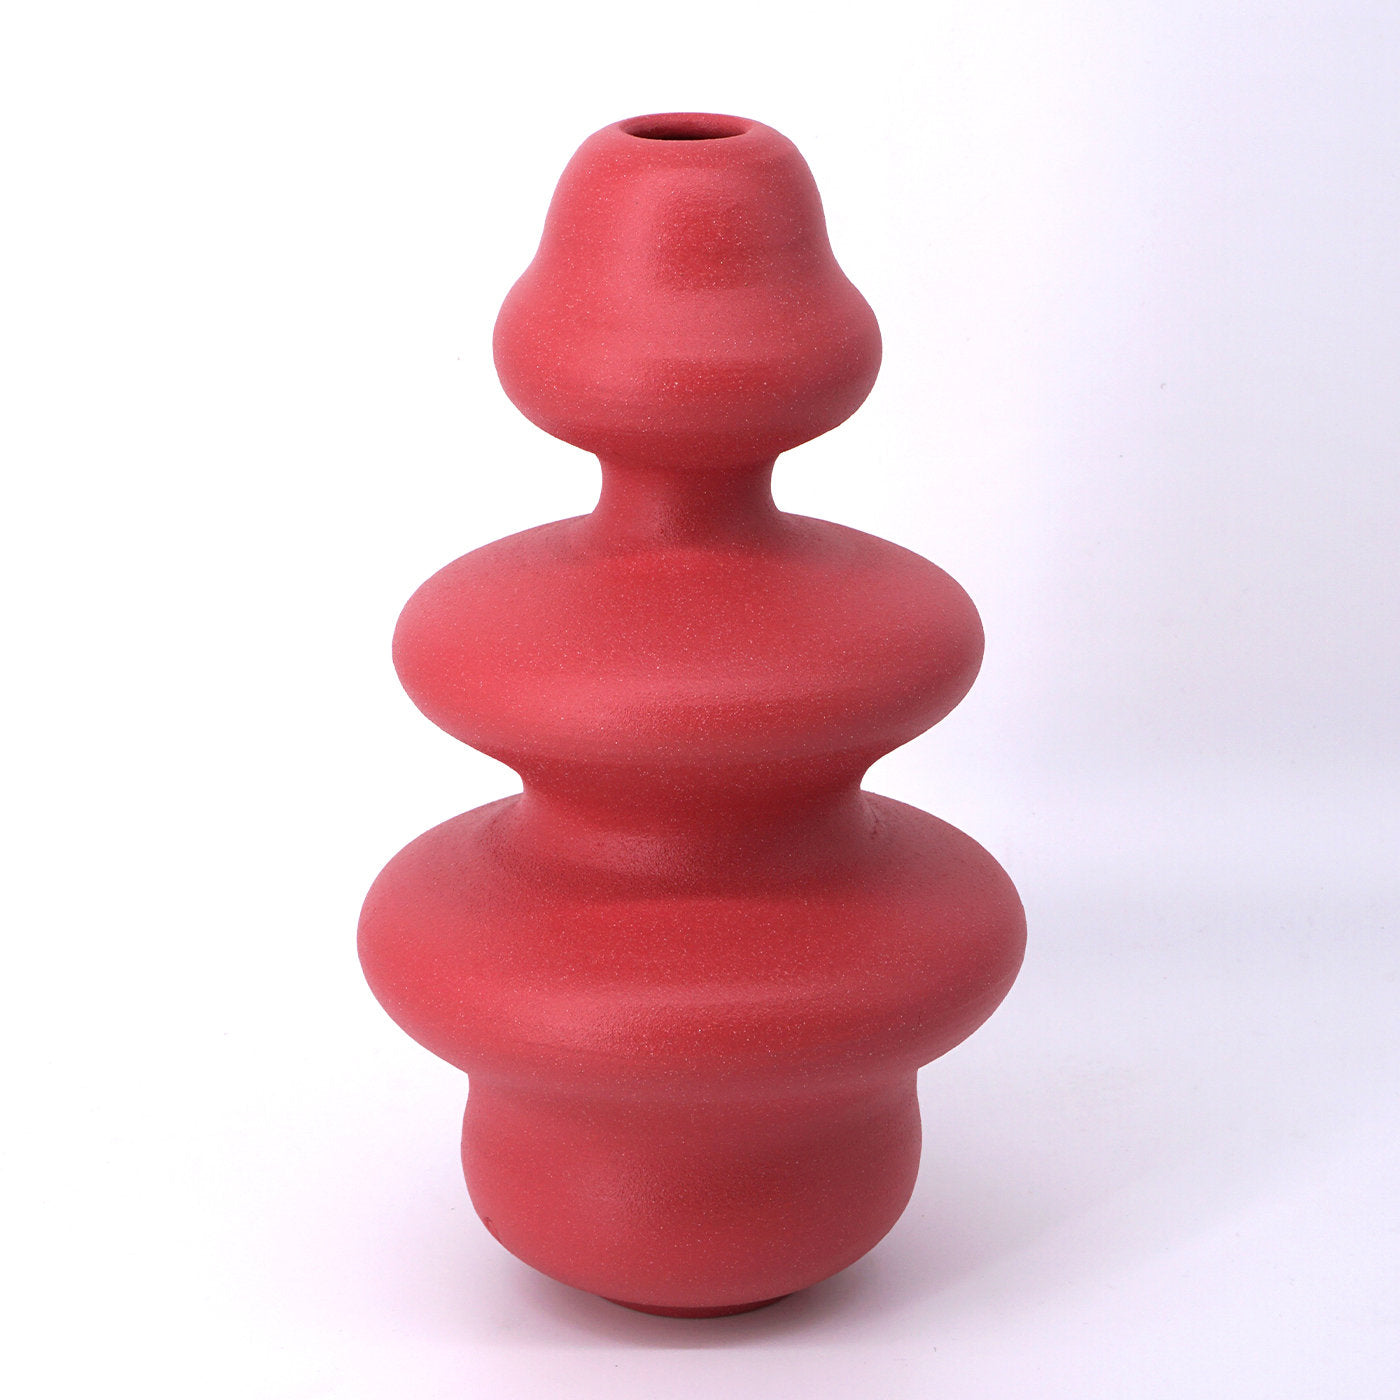 Crisalide Red Vase #1 - Alternative view 1